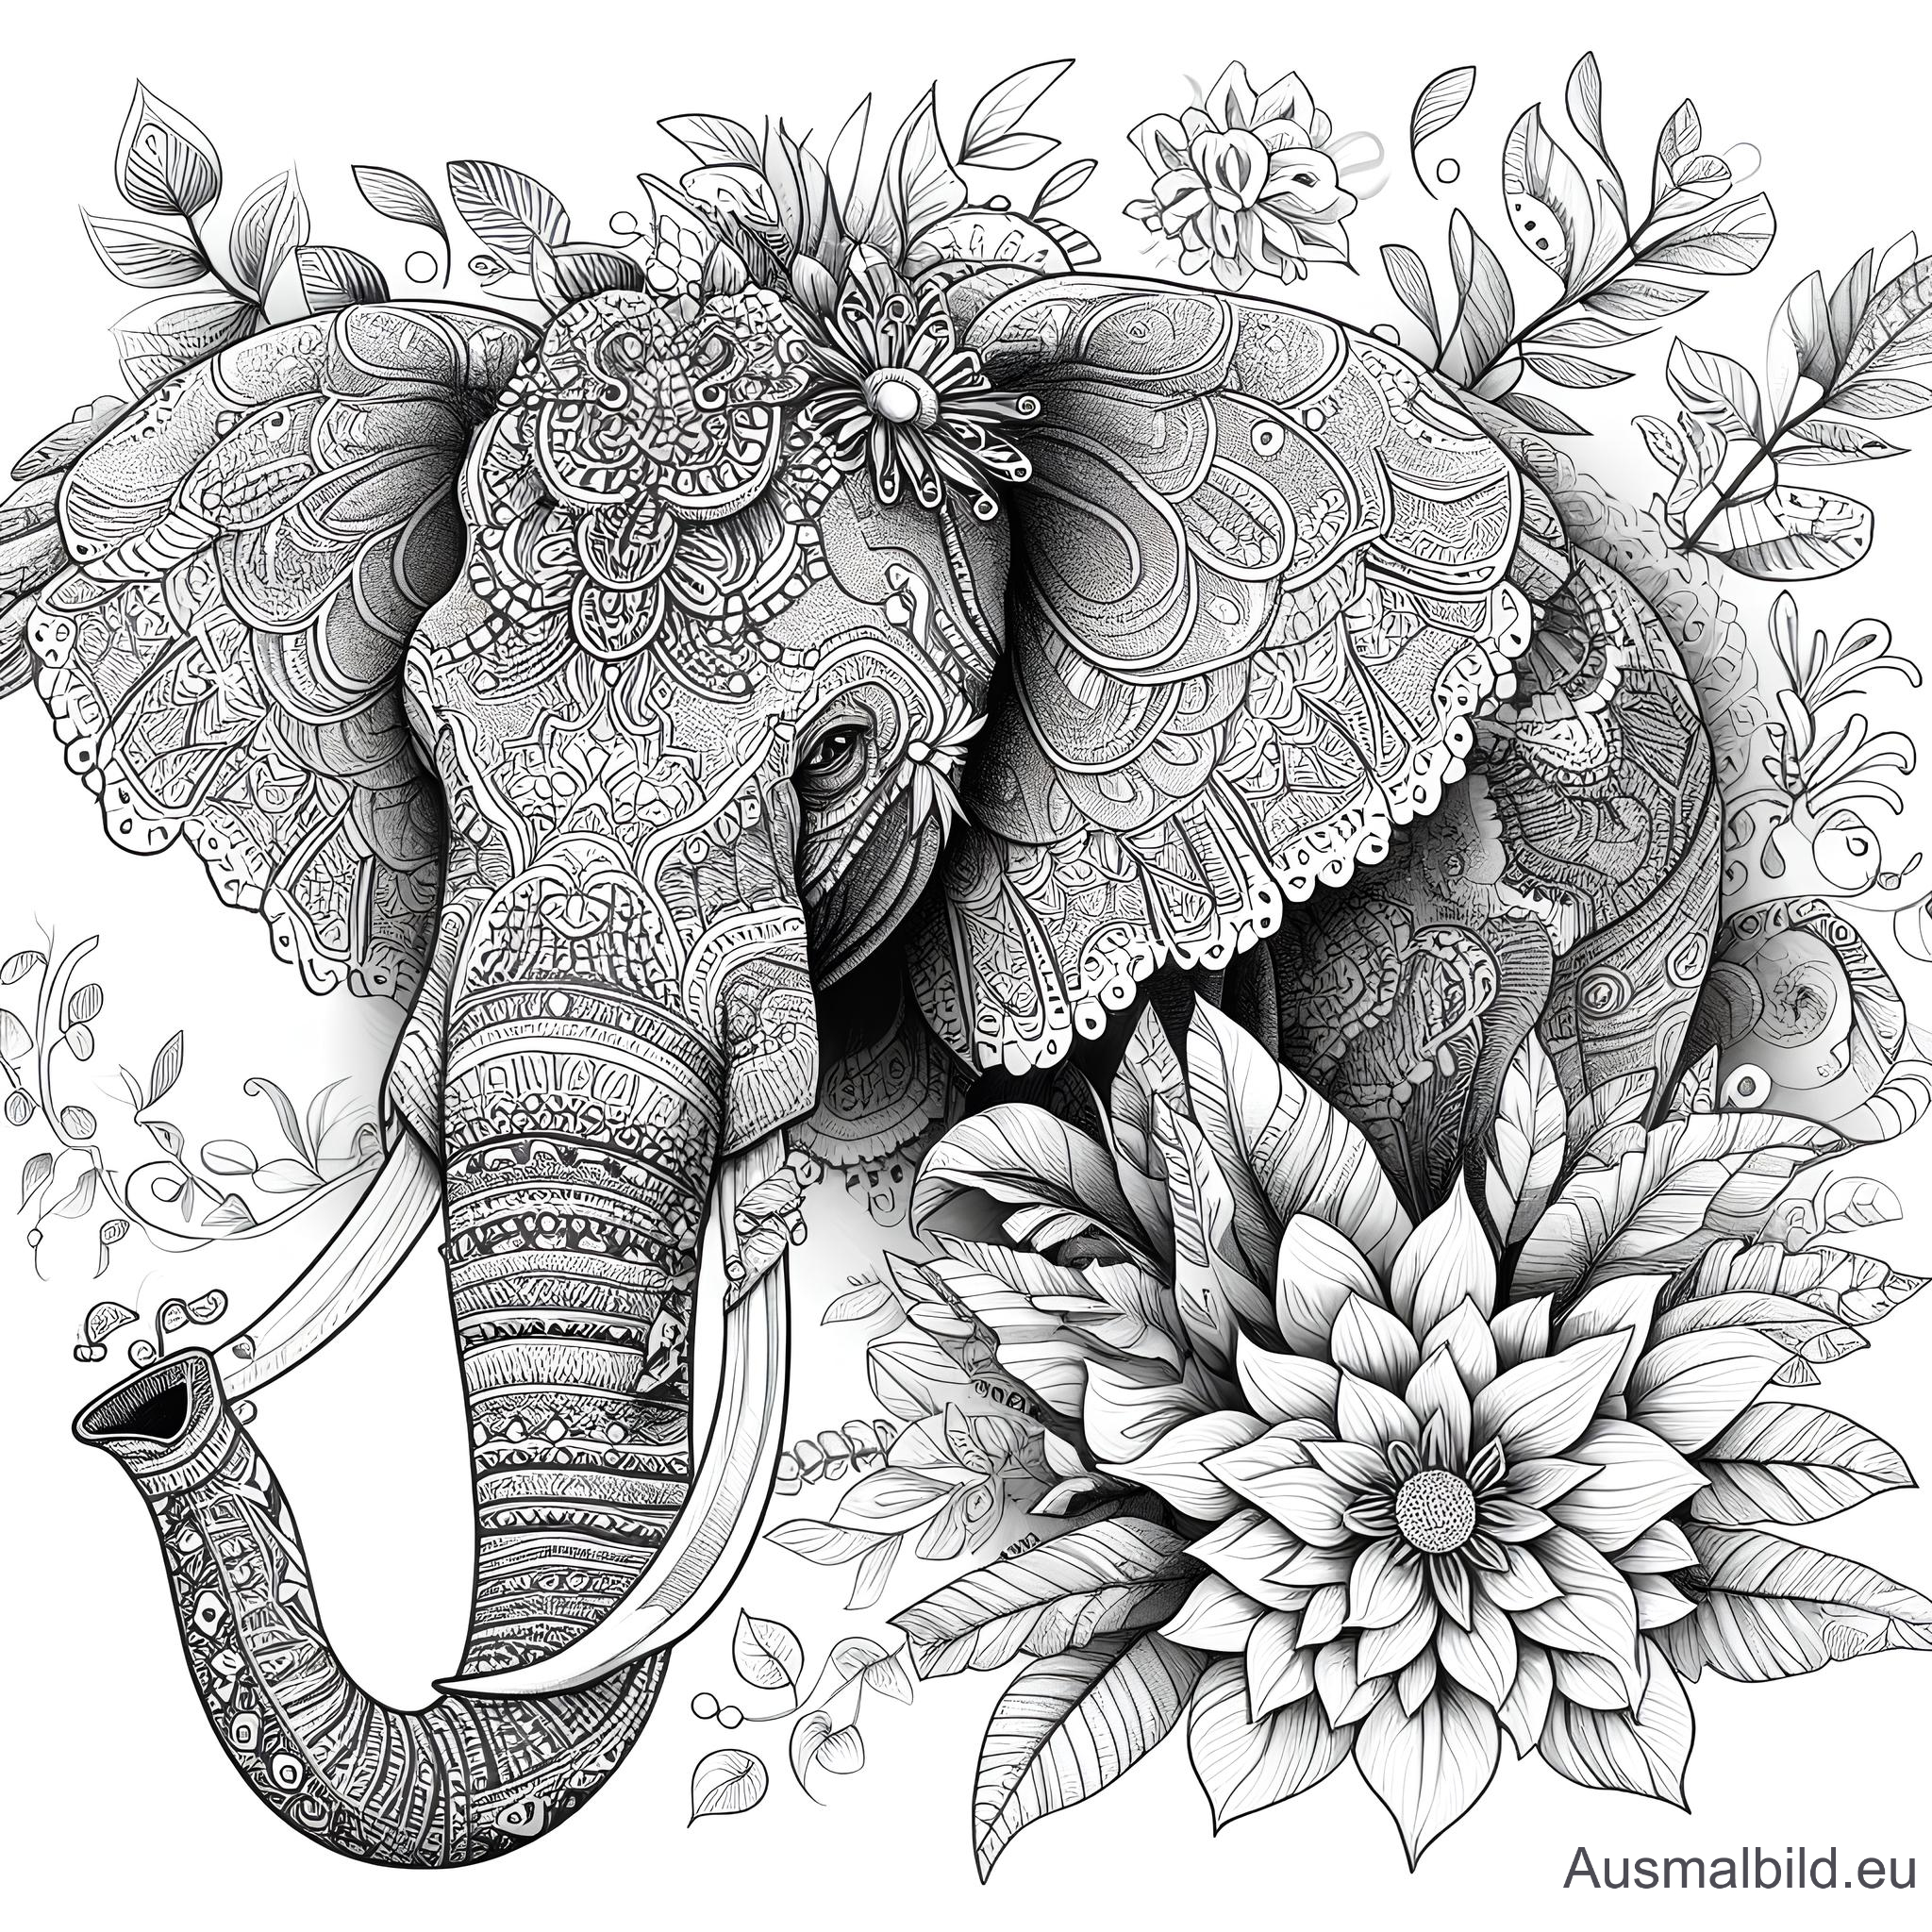 Ausmalbild - Elefant Mandala